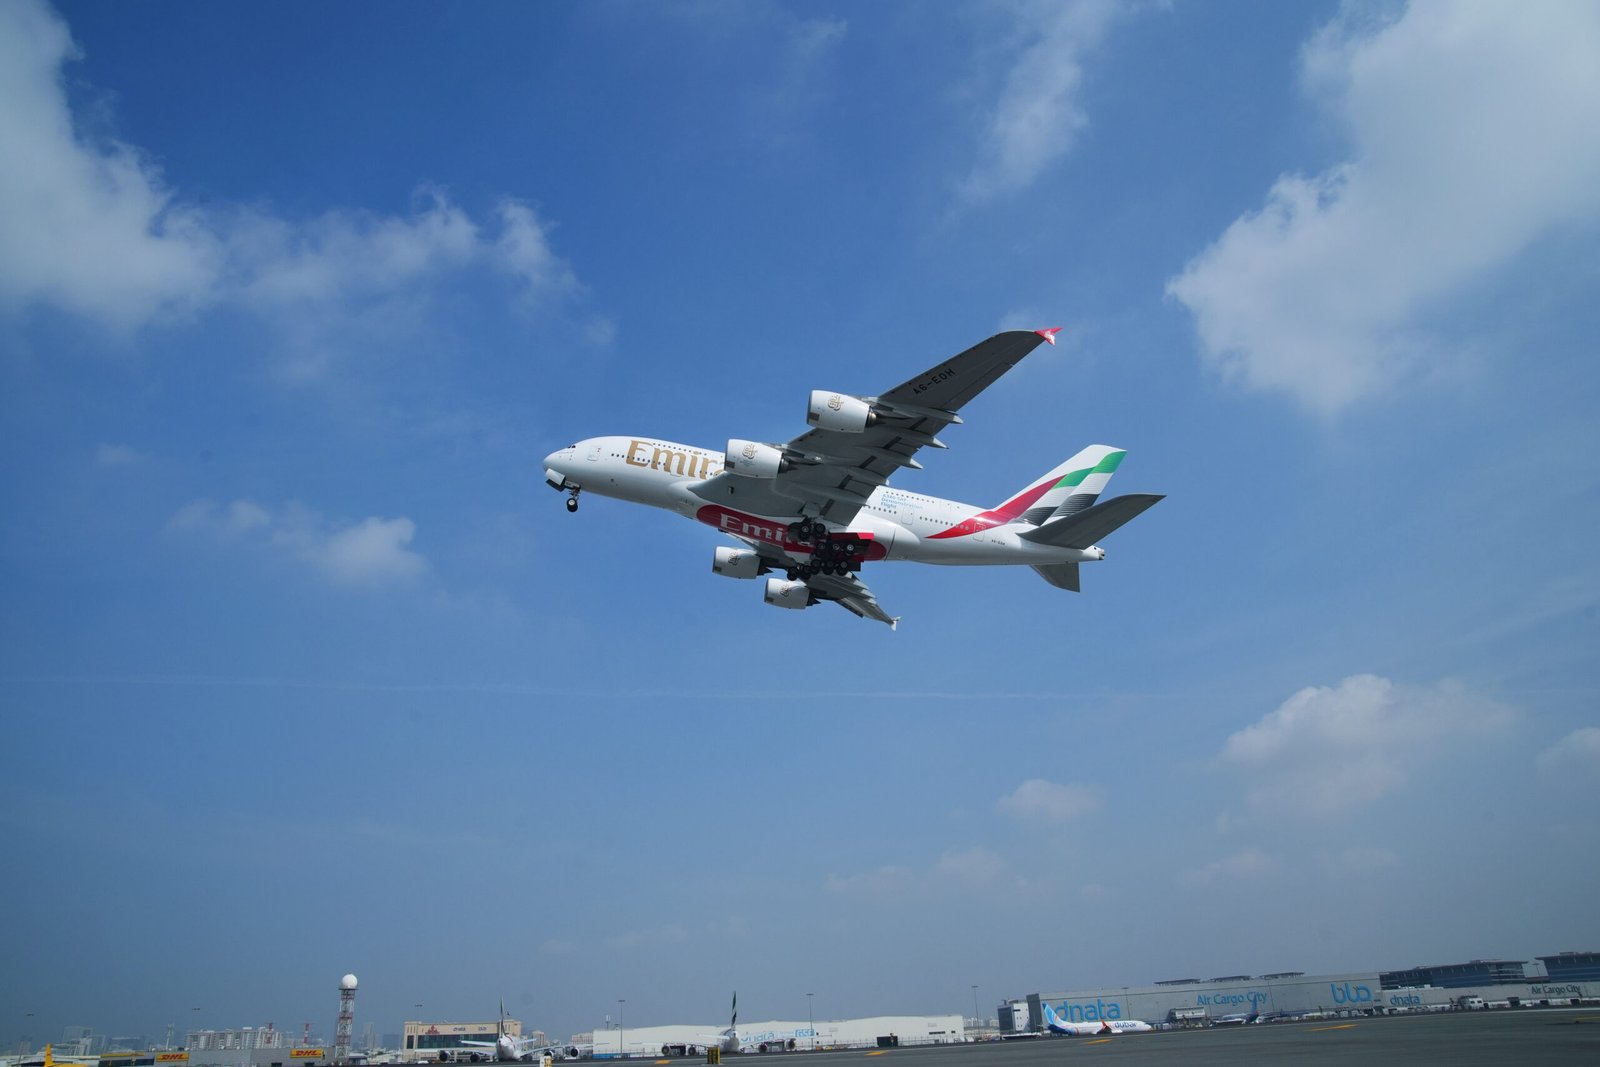 El Airbus A380 de Emirates durante el despegue. Foto: Emirates.